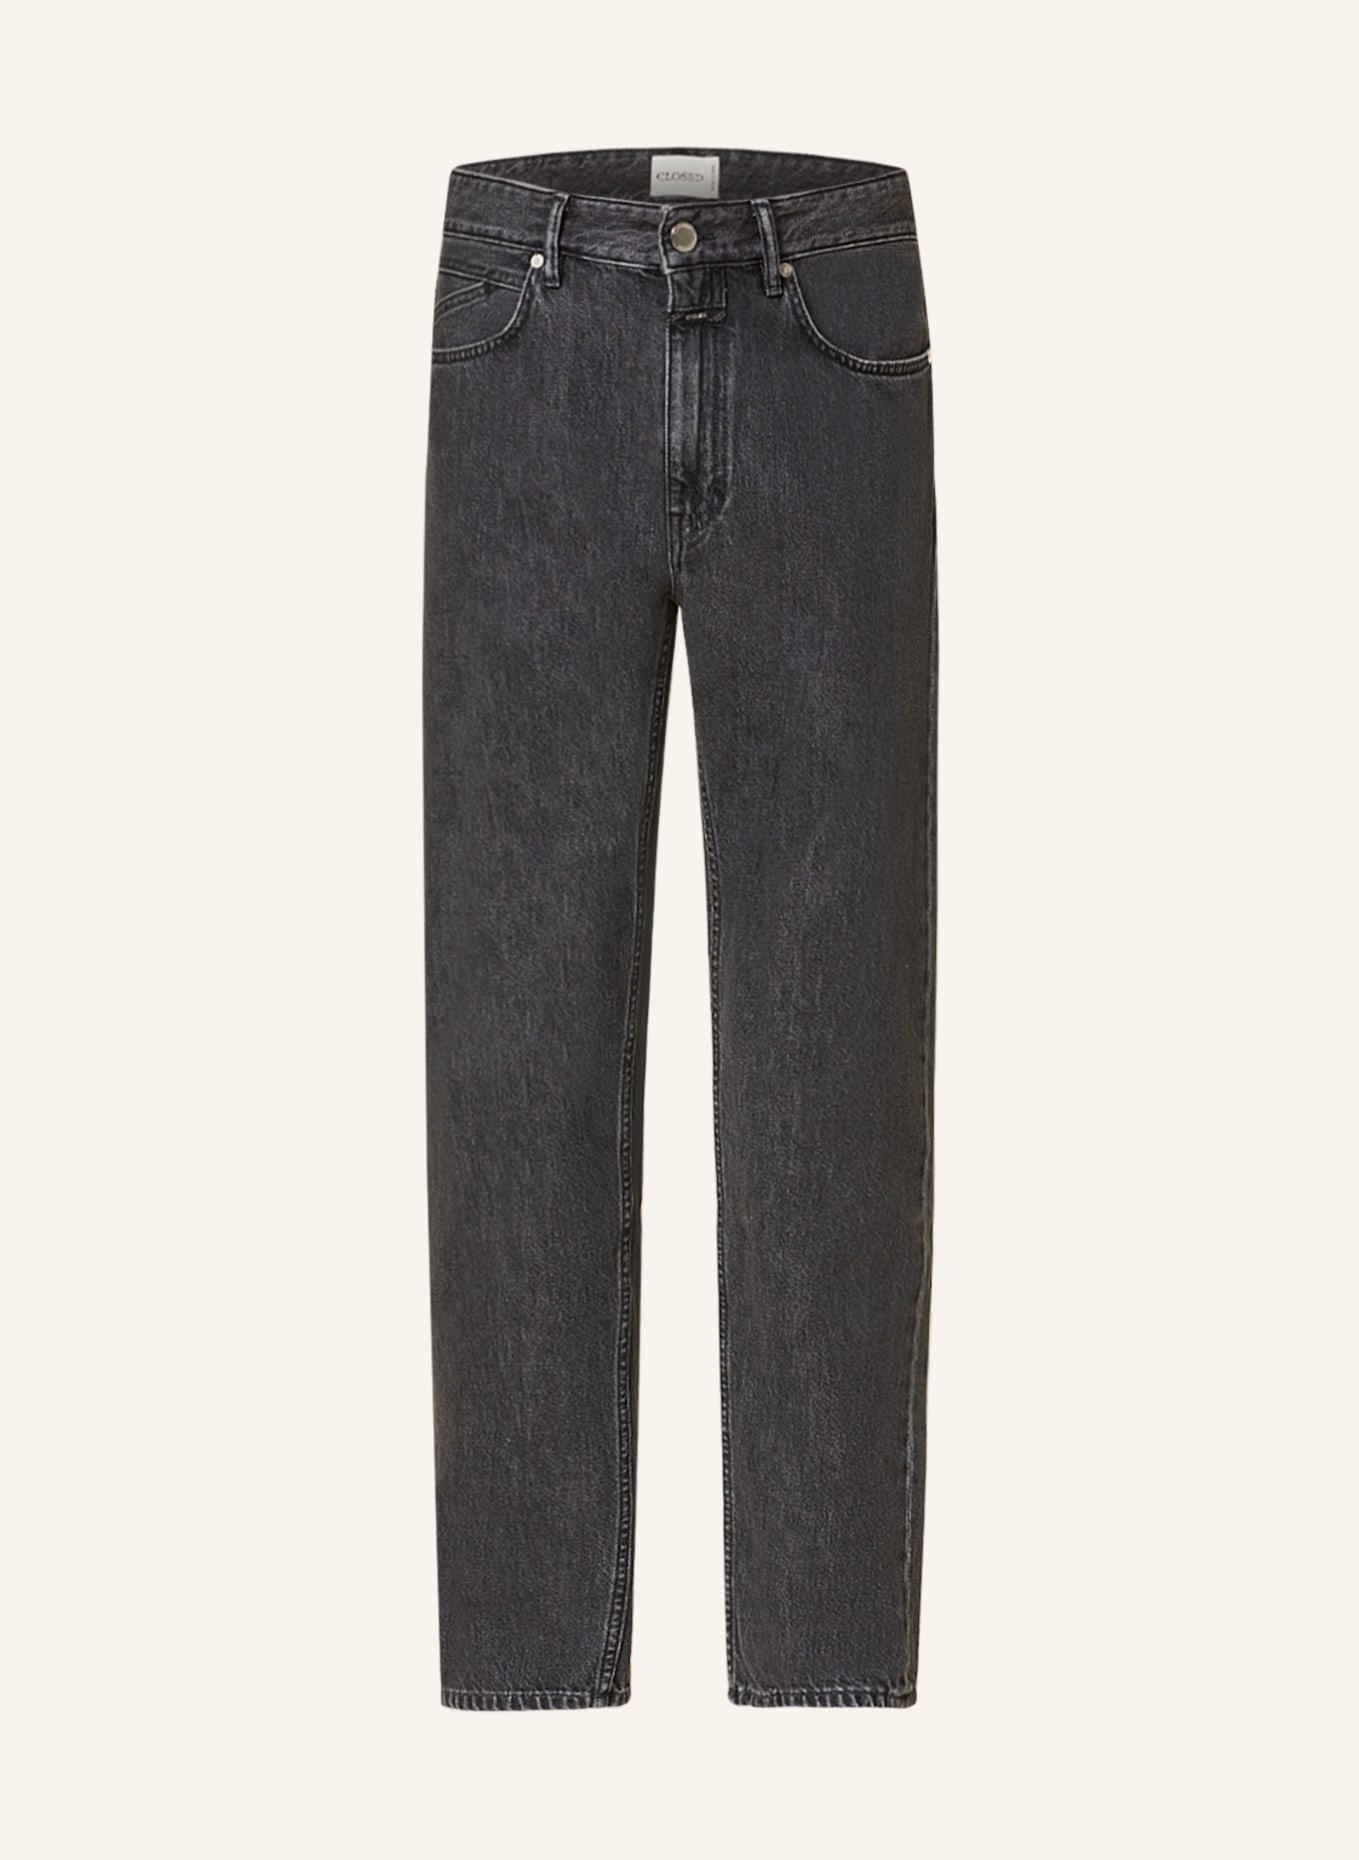 CLOSED Jeans COOPER TRUE Tapered Fit, Farbe: DGY DARK GREY (Bild 1)